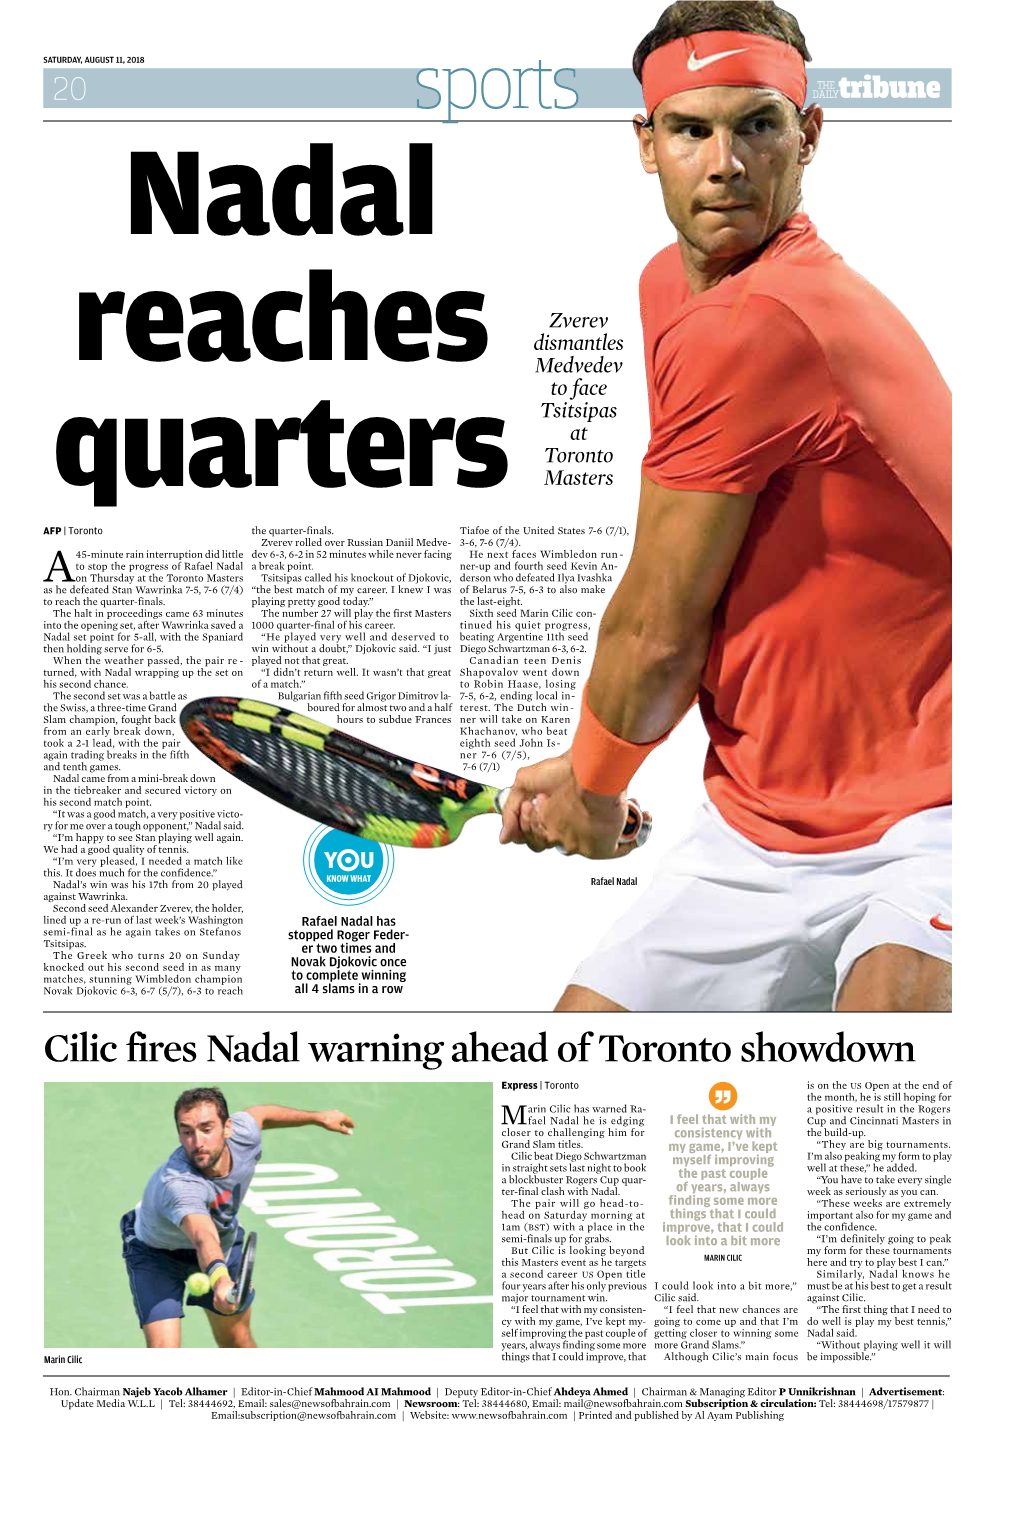 Cilic Fires Nadal Warning Ahead of Toronto Showdown